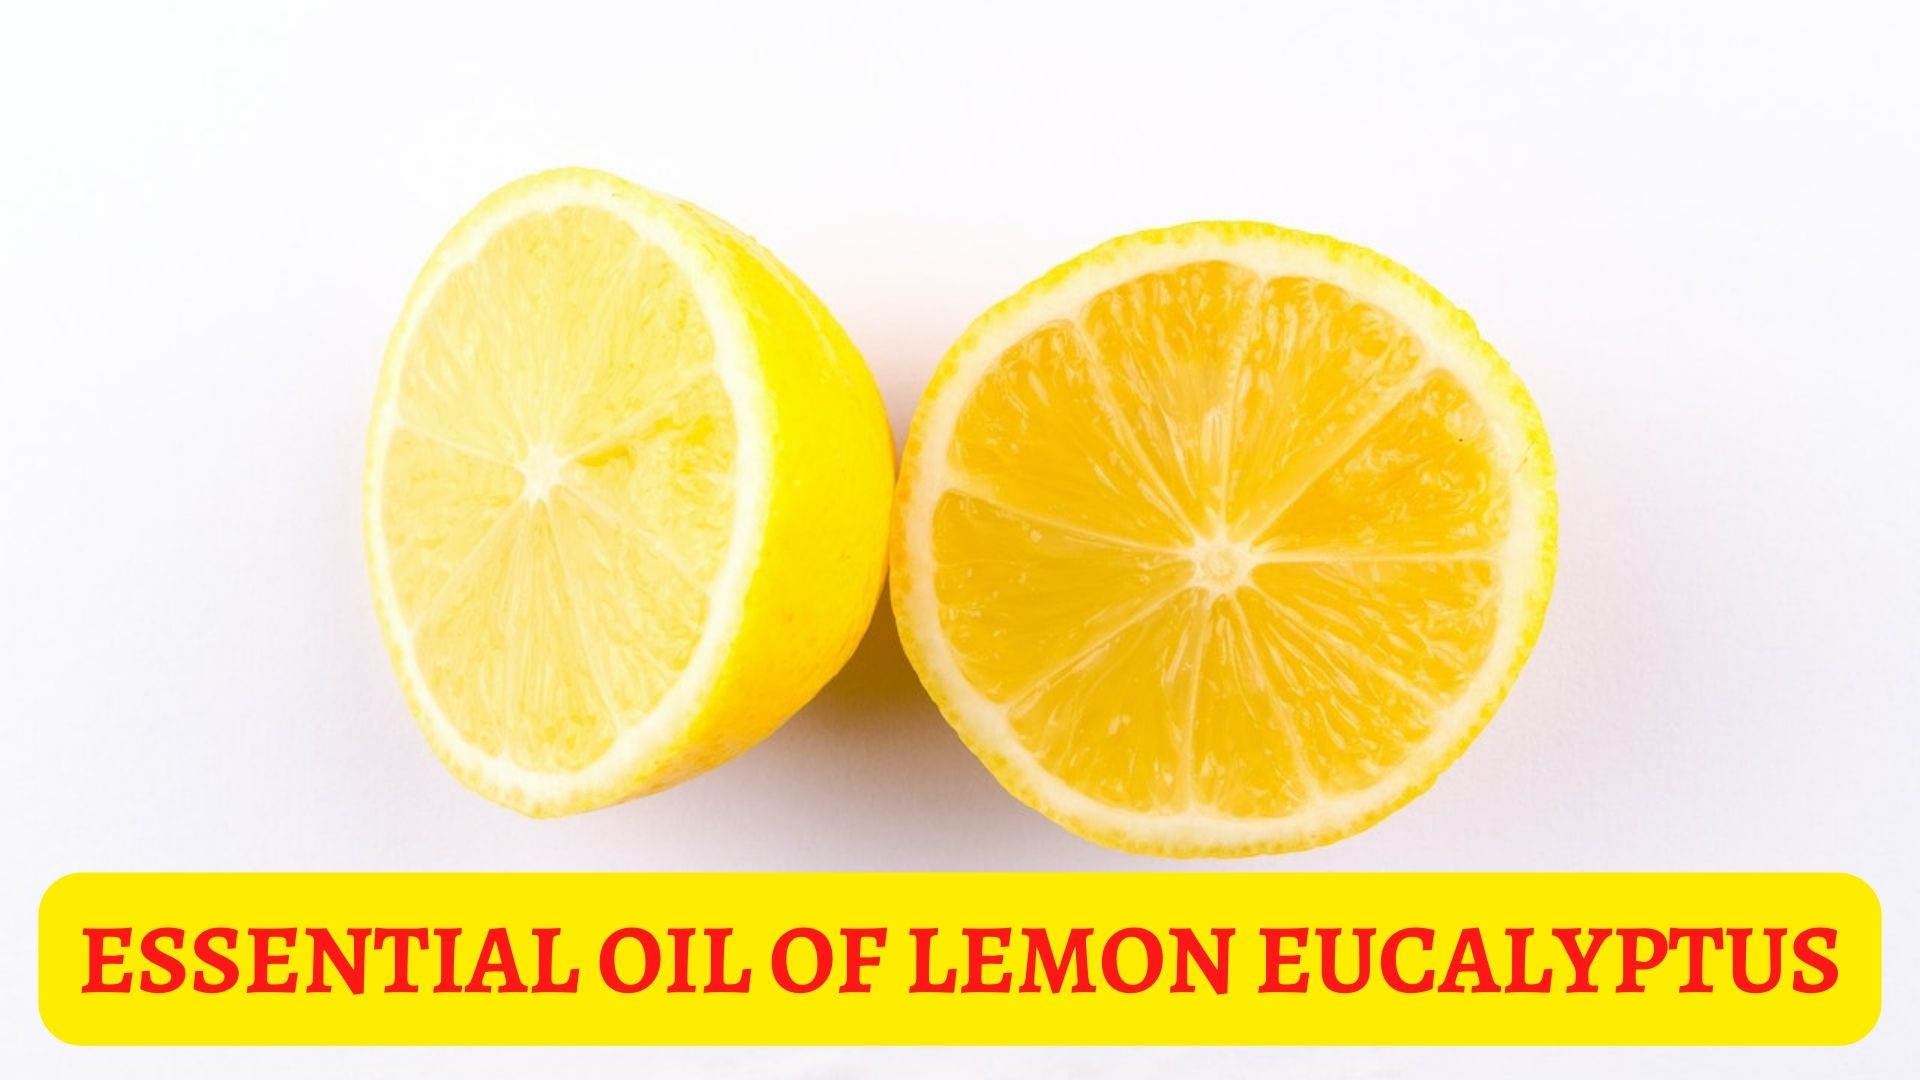 Essential Oil Of Lemon Eucalyptus - Benefits, Uses And Risks